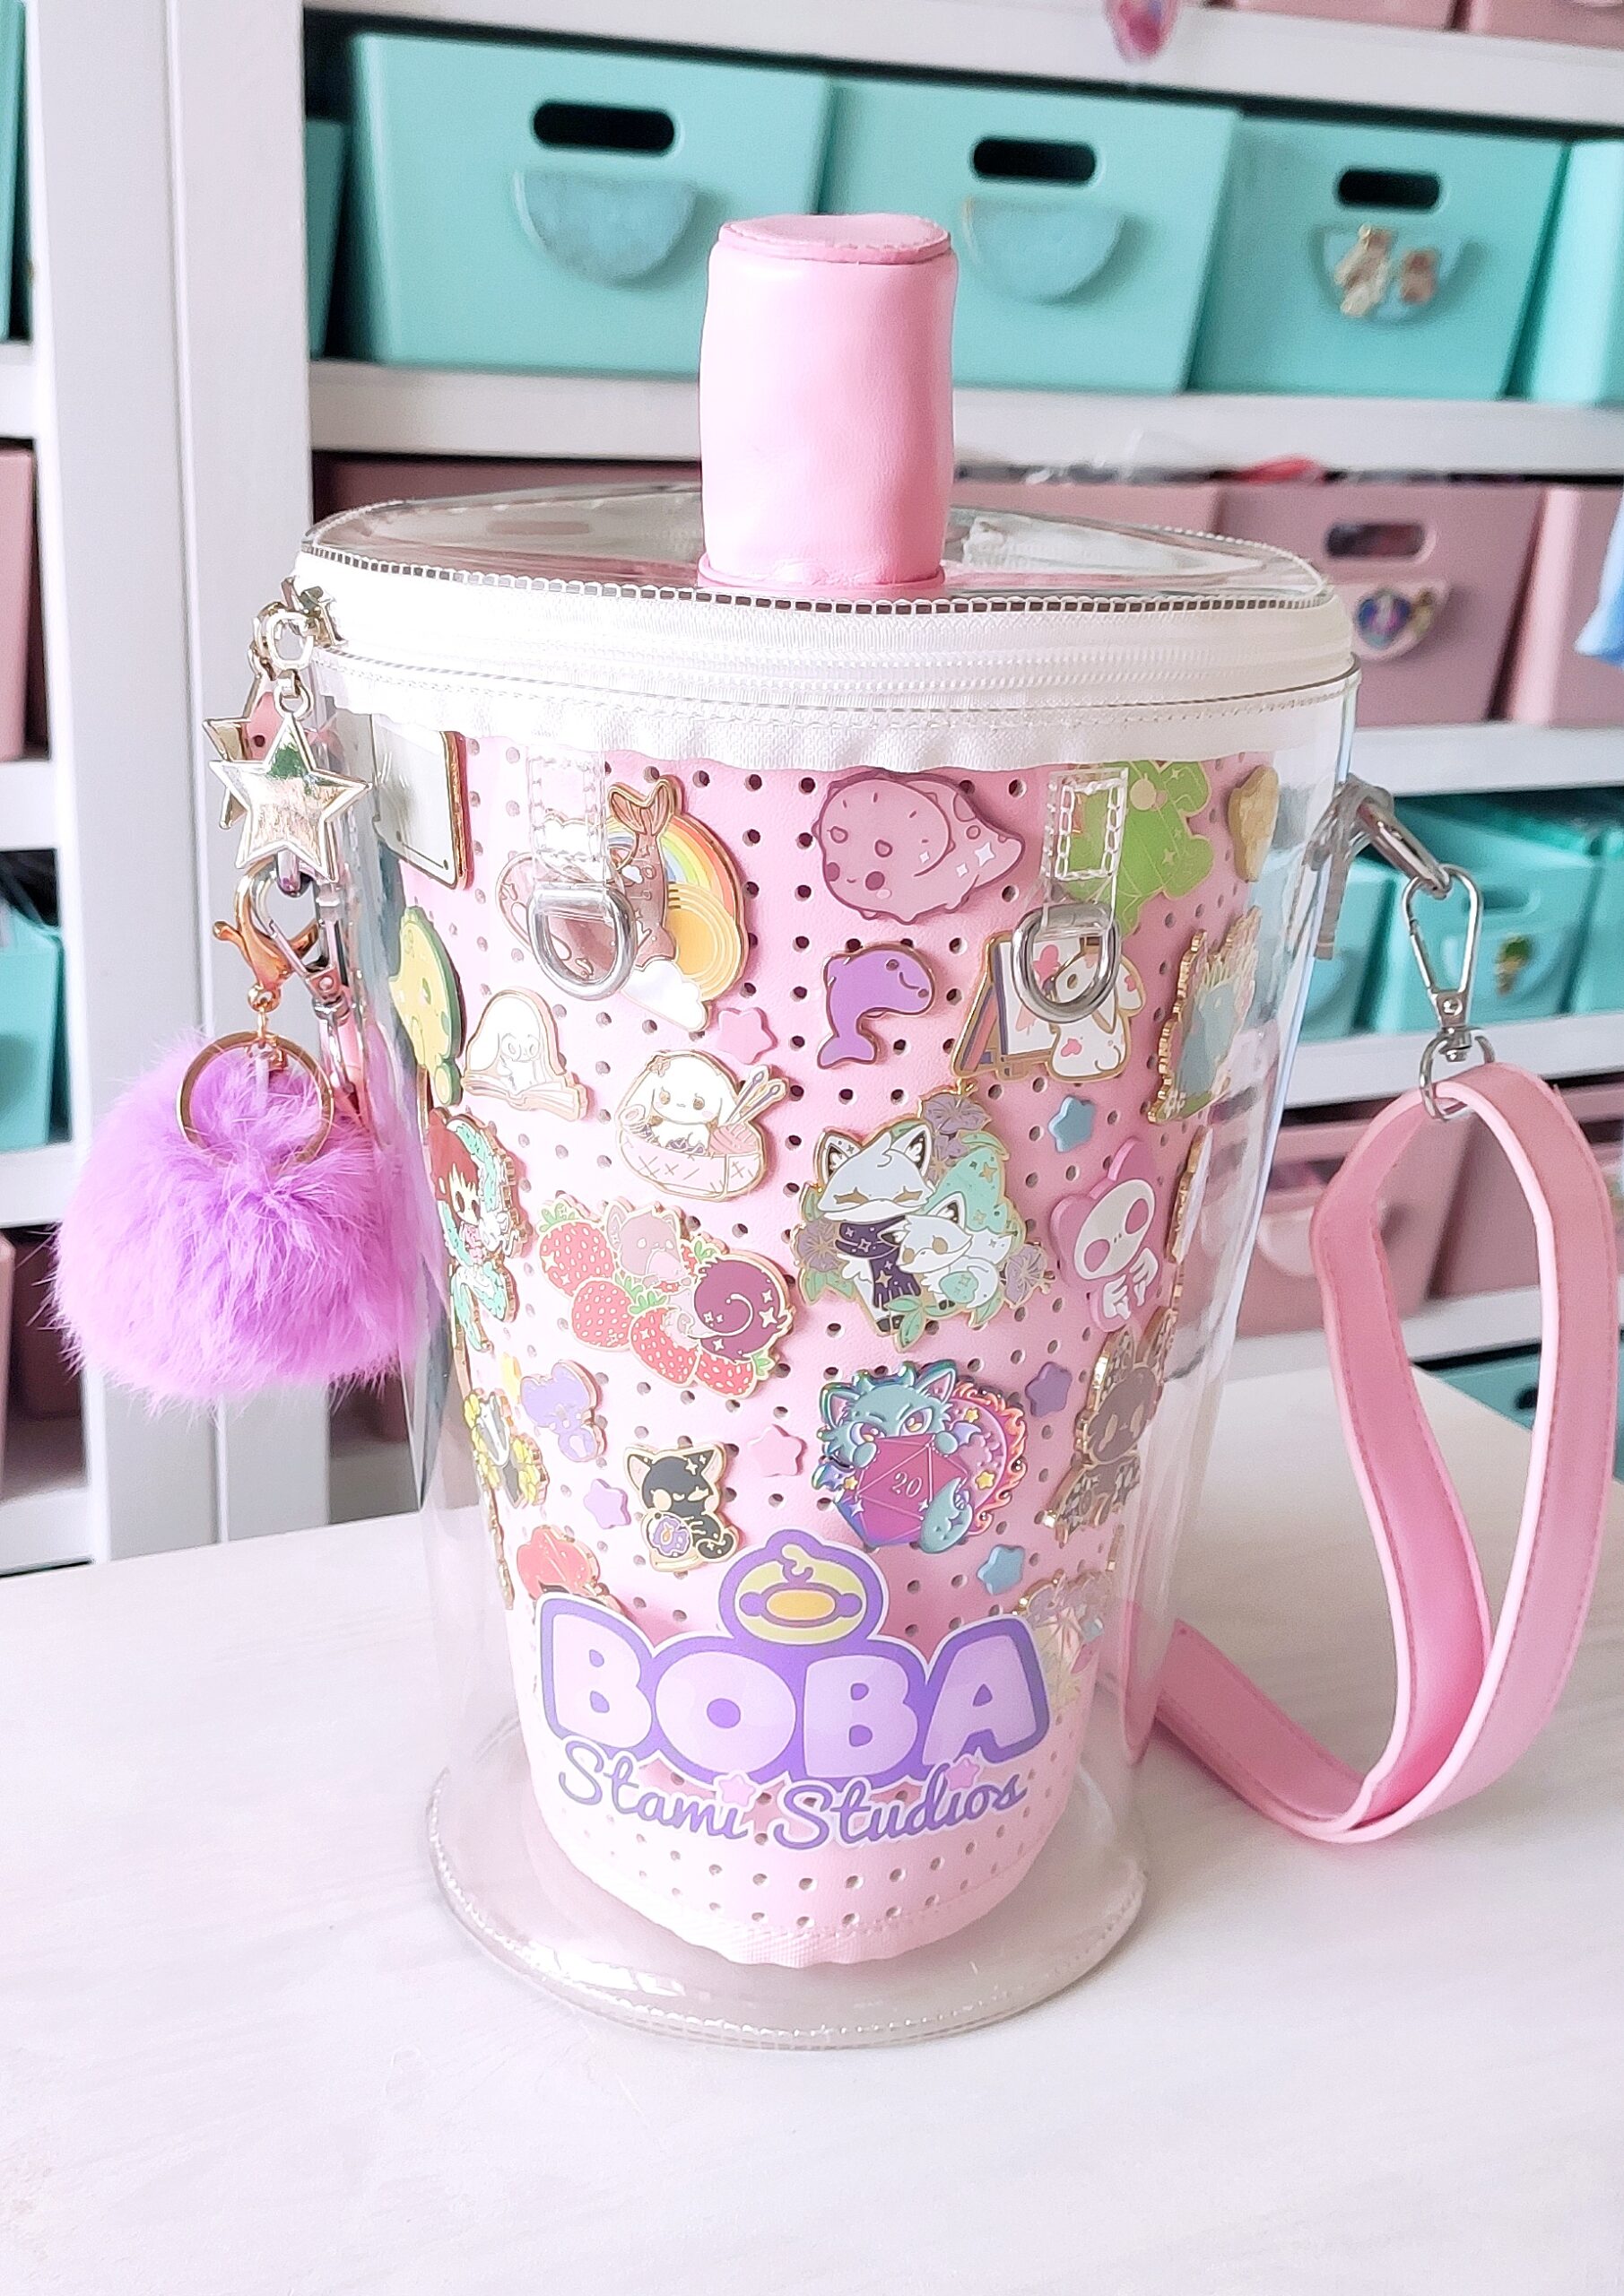 BOBA BUDDY Boba Bag / Boba Carrier / Bubble Tea Bag / Bubble Tea